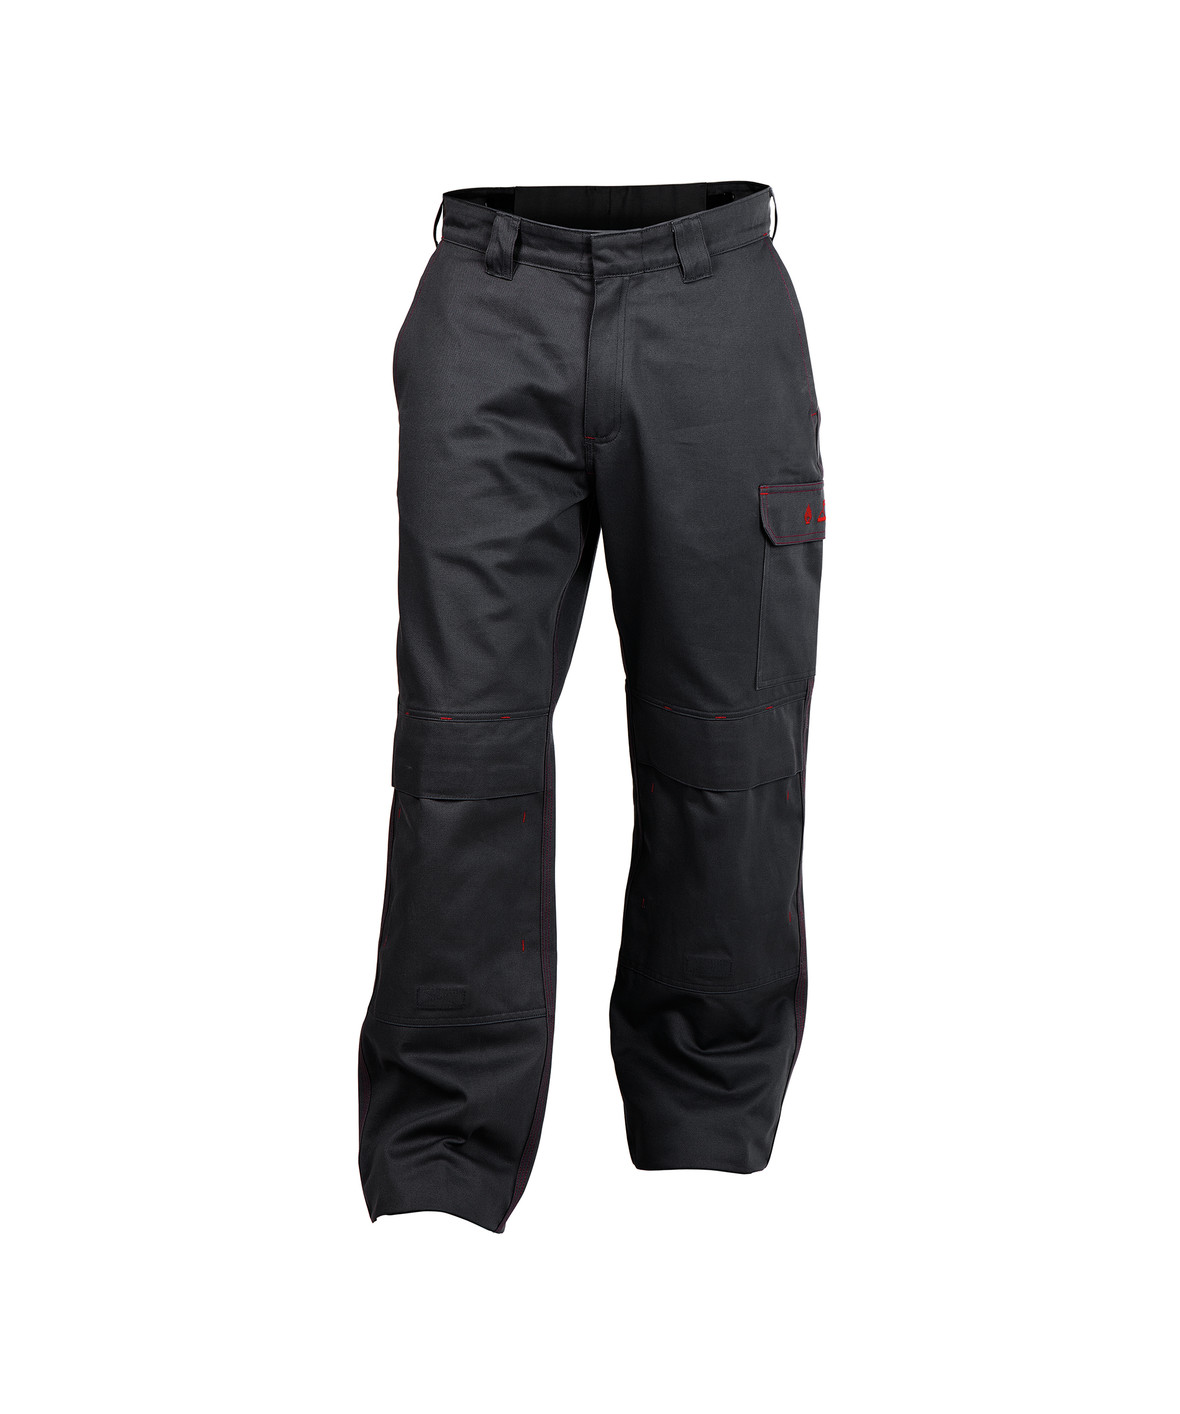 ARIZONA - Flame retardant work trousers with knee pockets